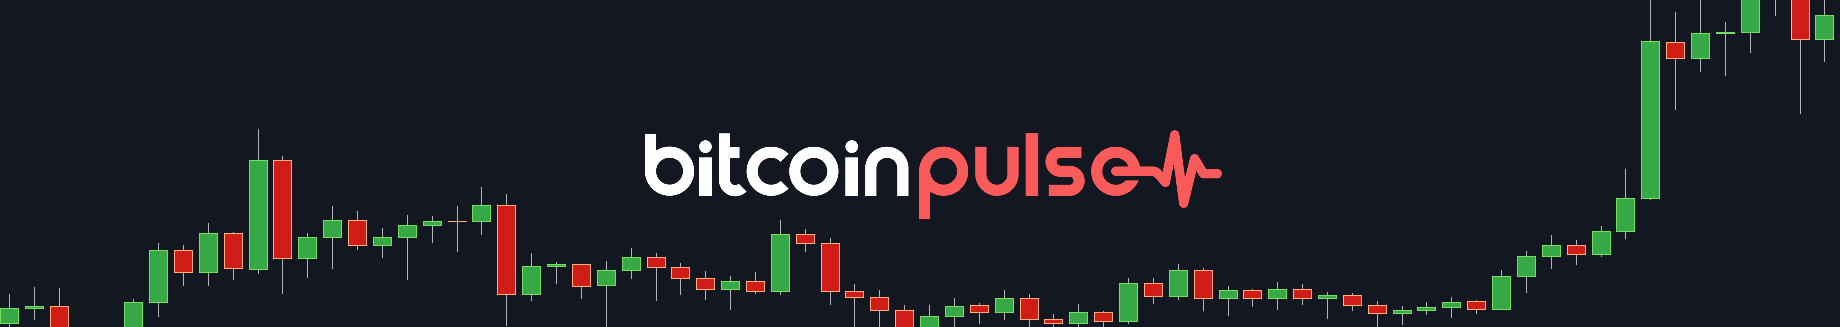 Only Bitcoin Makes Sense Right Now - Market Commentary, Bitcoin Pulse #74